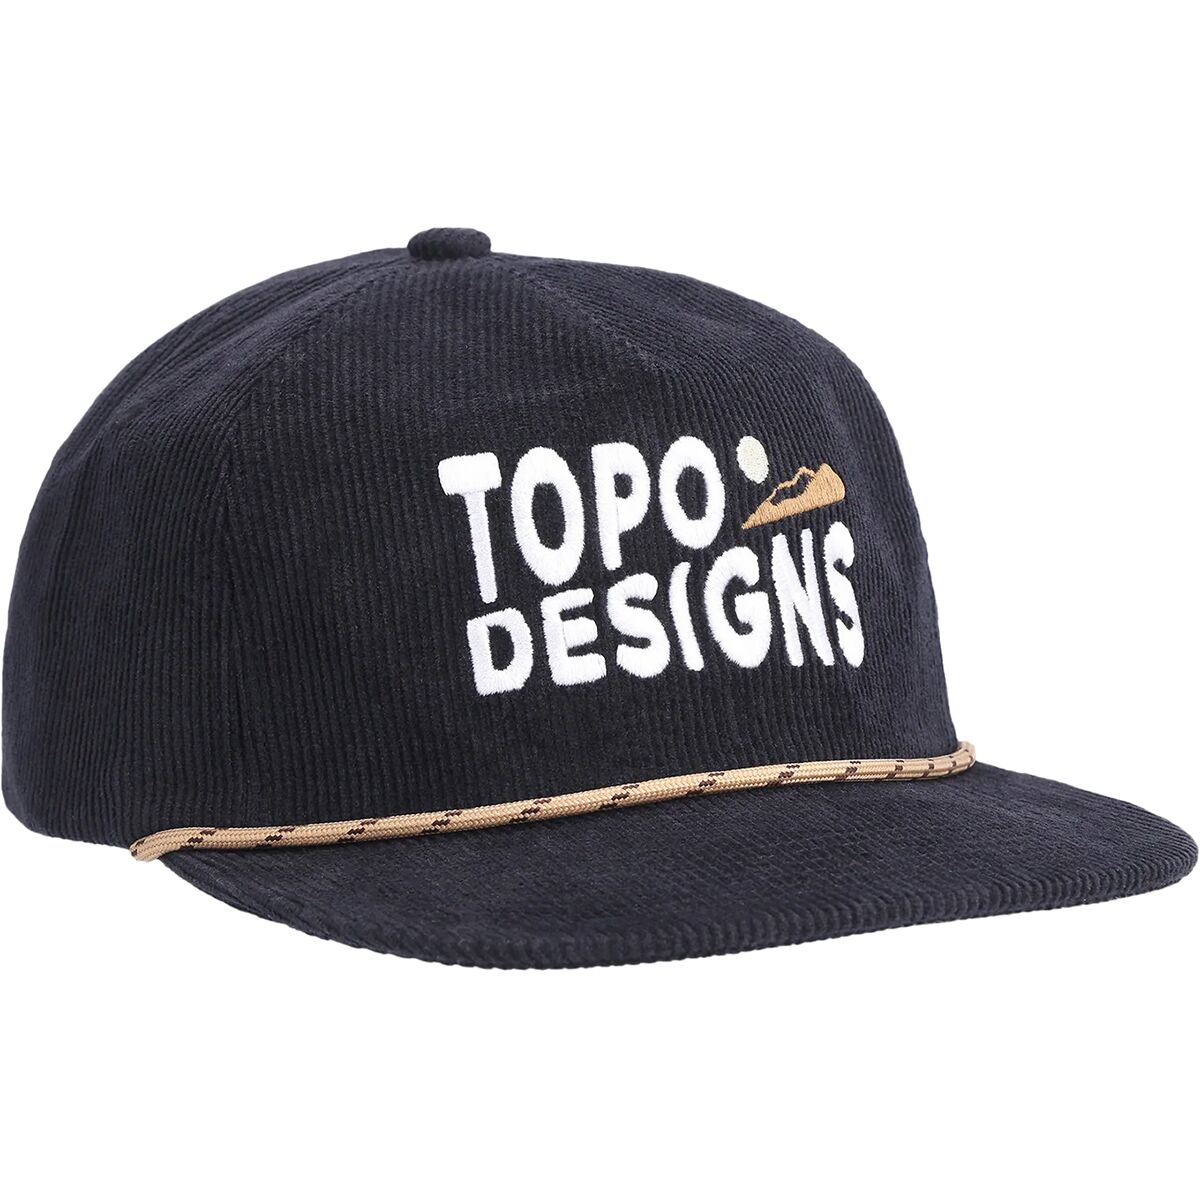 Topo Designs Rugged Peaks Corduroy Trucker Hat